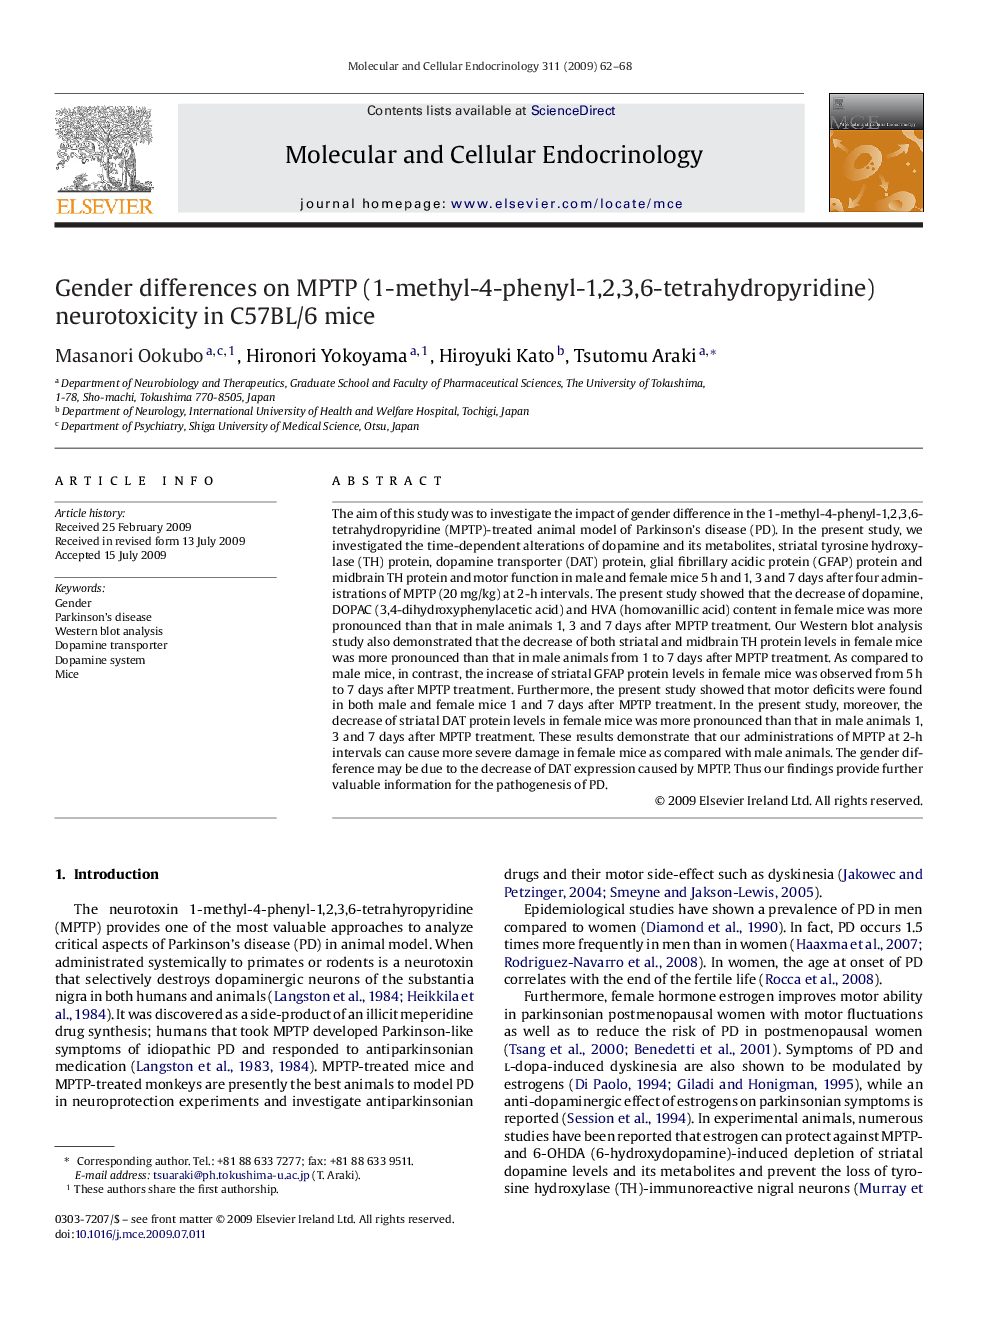 Gender differences on MPTP (1-methyl-4-phenyl-1,2,3,6-tetrahydropyridine) neurotoxicity in C57BL/6 mice